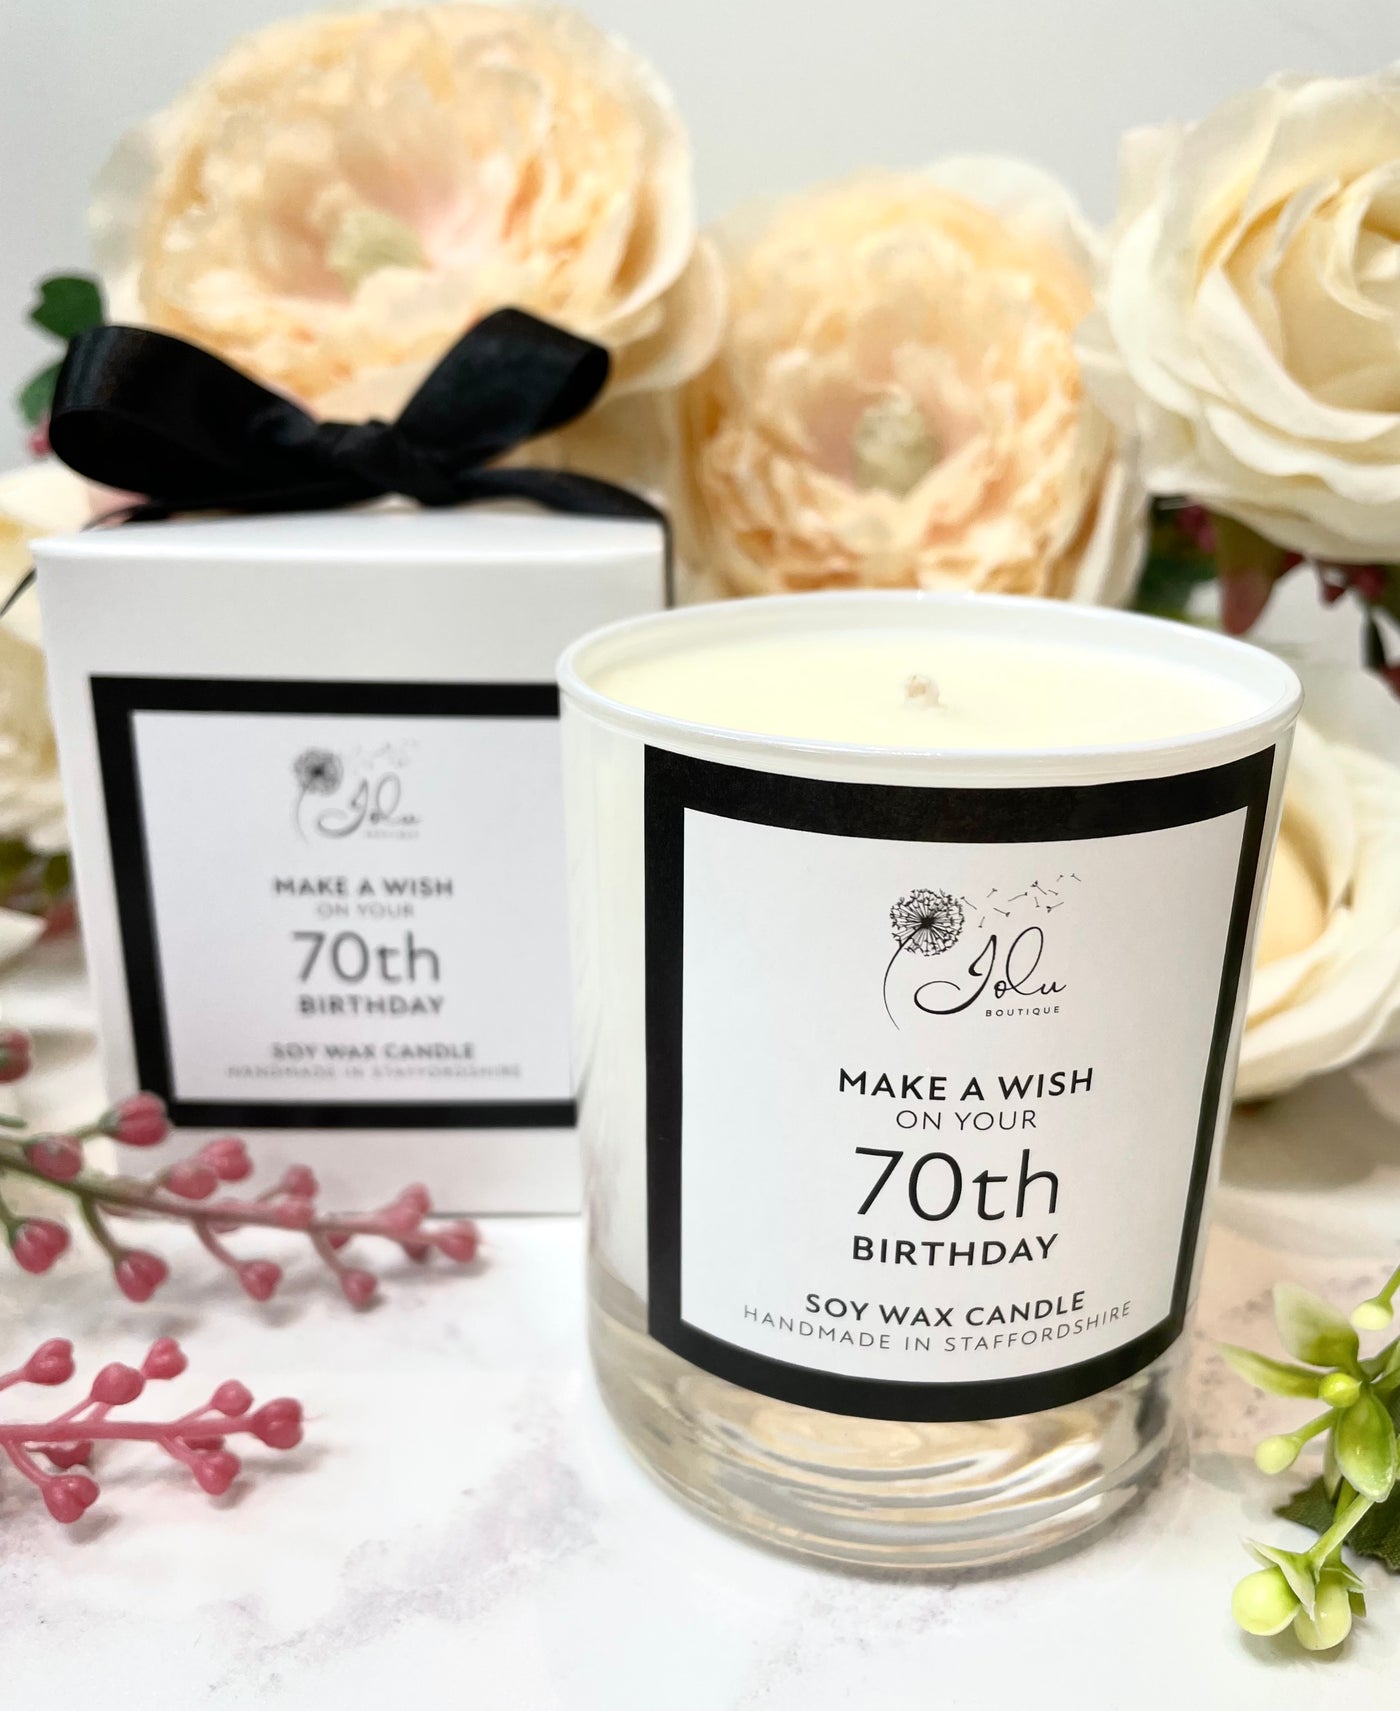 Jolu Boutique Make a Wish Sentiment Candle - 70th Birthday